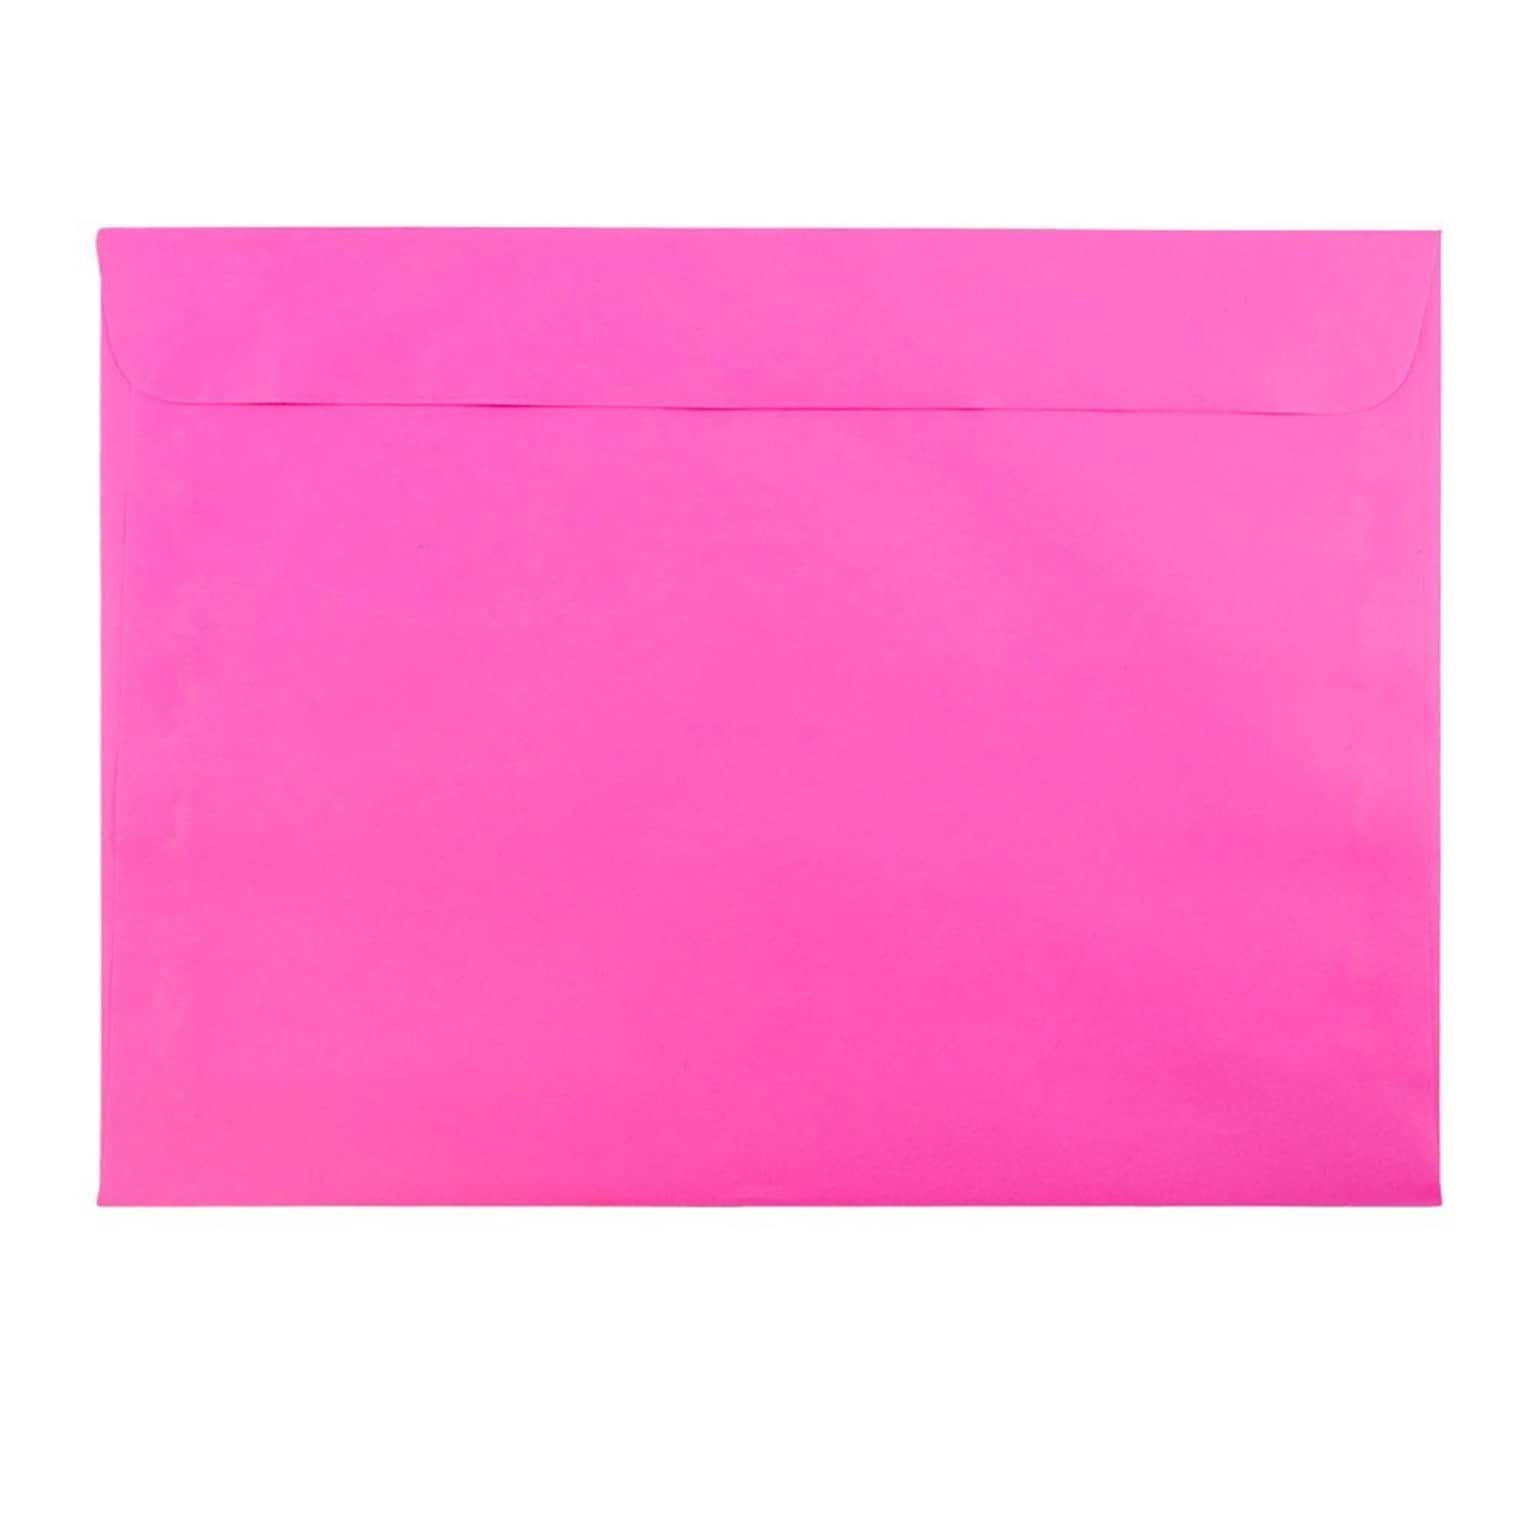 JAM Paper 9 x 12 Booklet Colored Envelopes, Ultra Fuchsia Pink, Bulk 1000/Carton (5156770B)